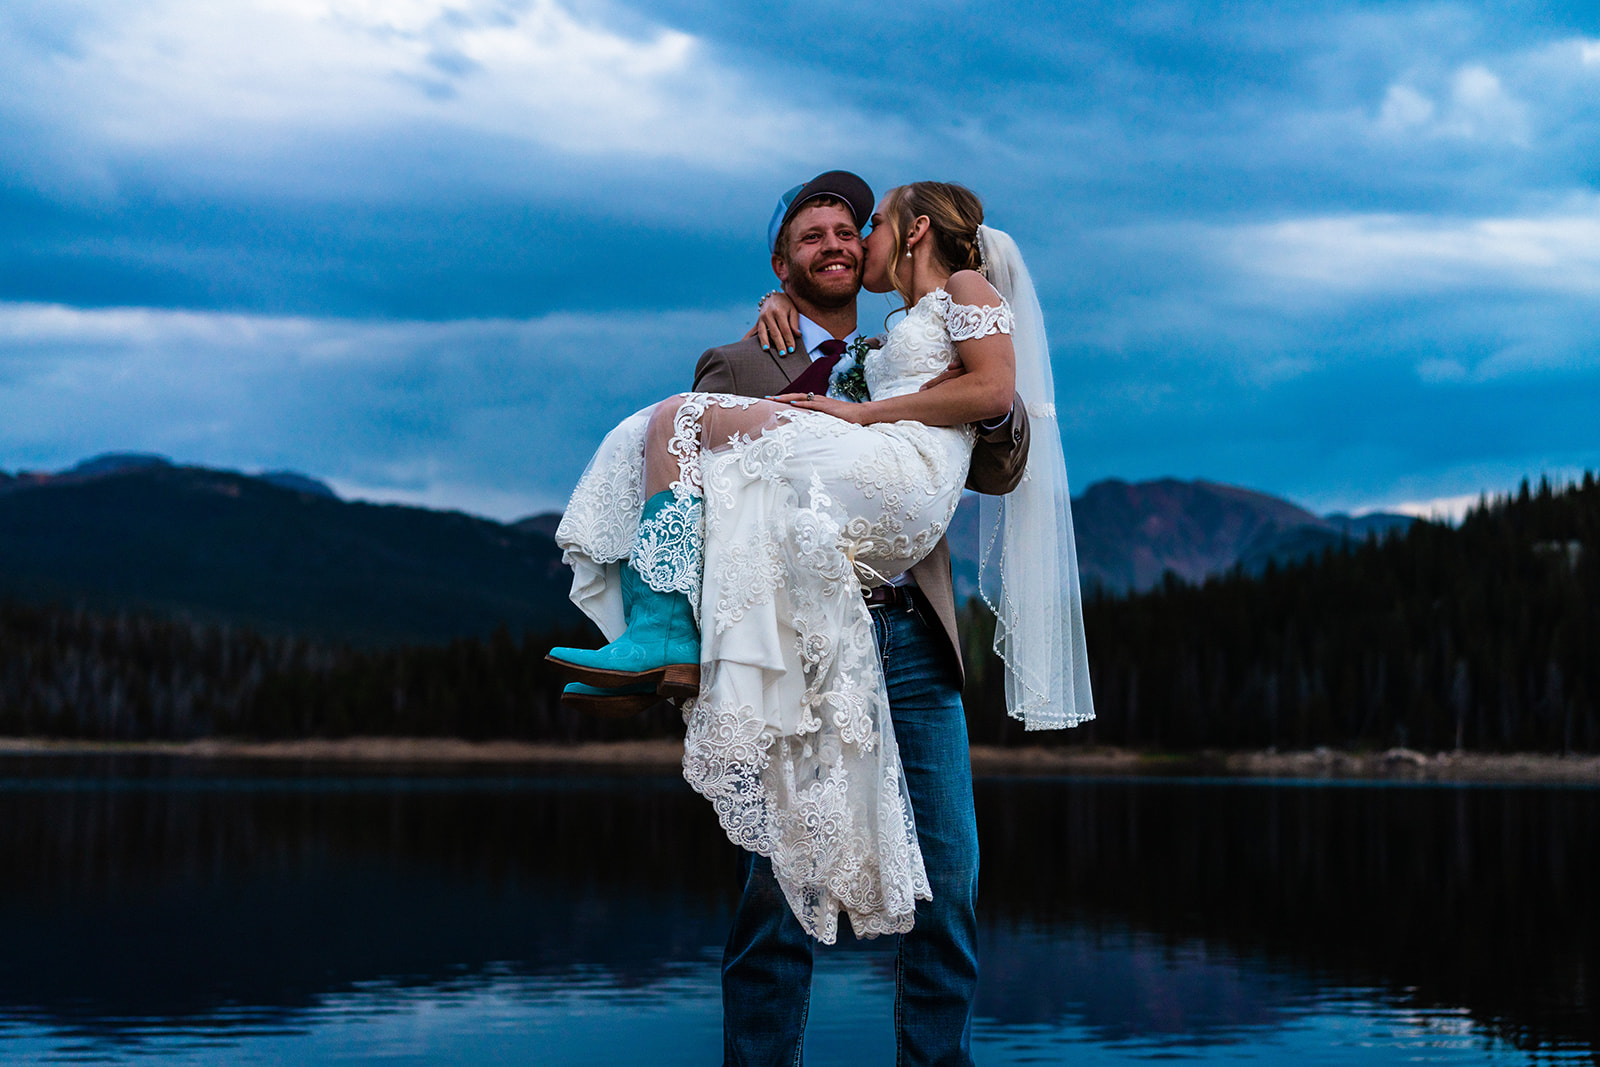 Adventure elopement Photos at a High Alpine Lake in Colorado